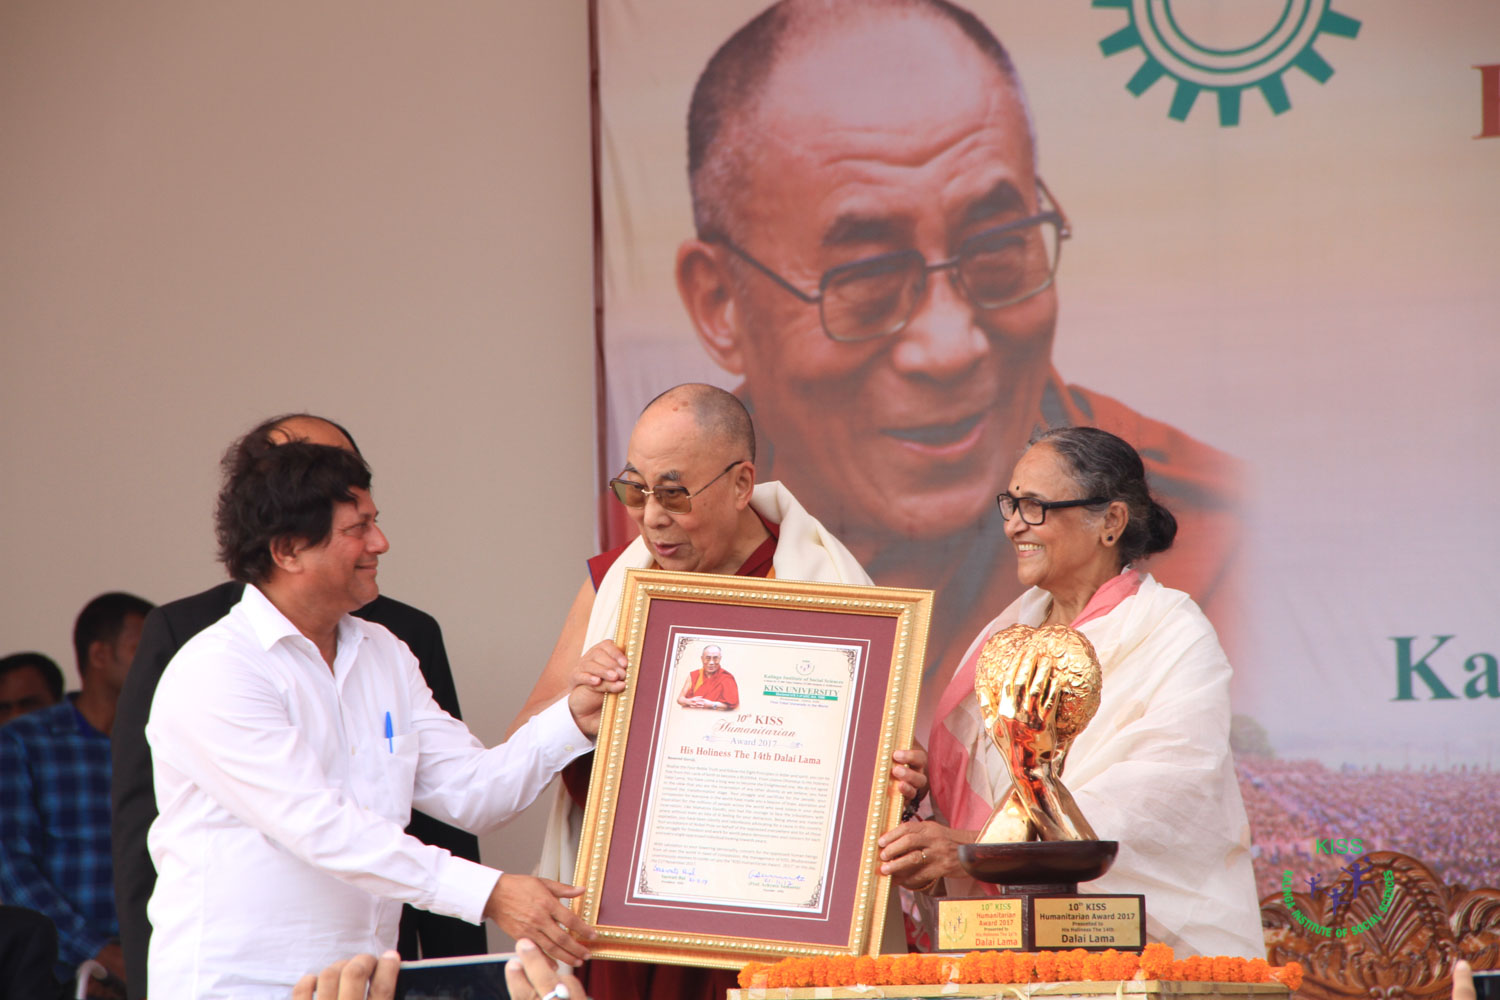 His Holiness The Dalai Lama receiving the KISS Humanitarian Award in the presence of esteemed dignitaries